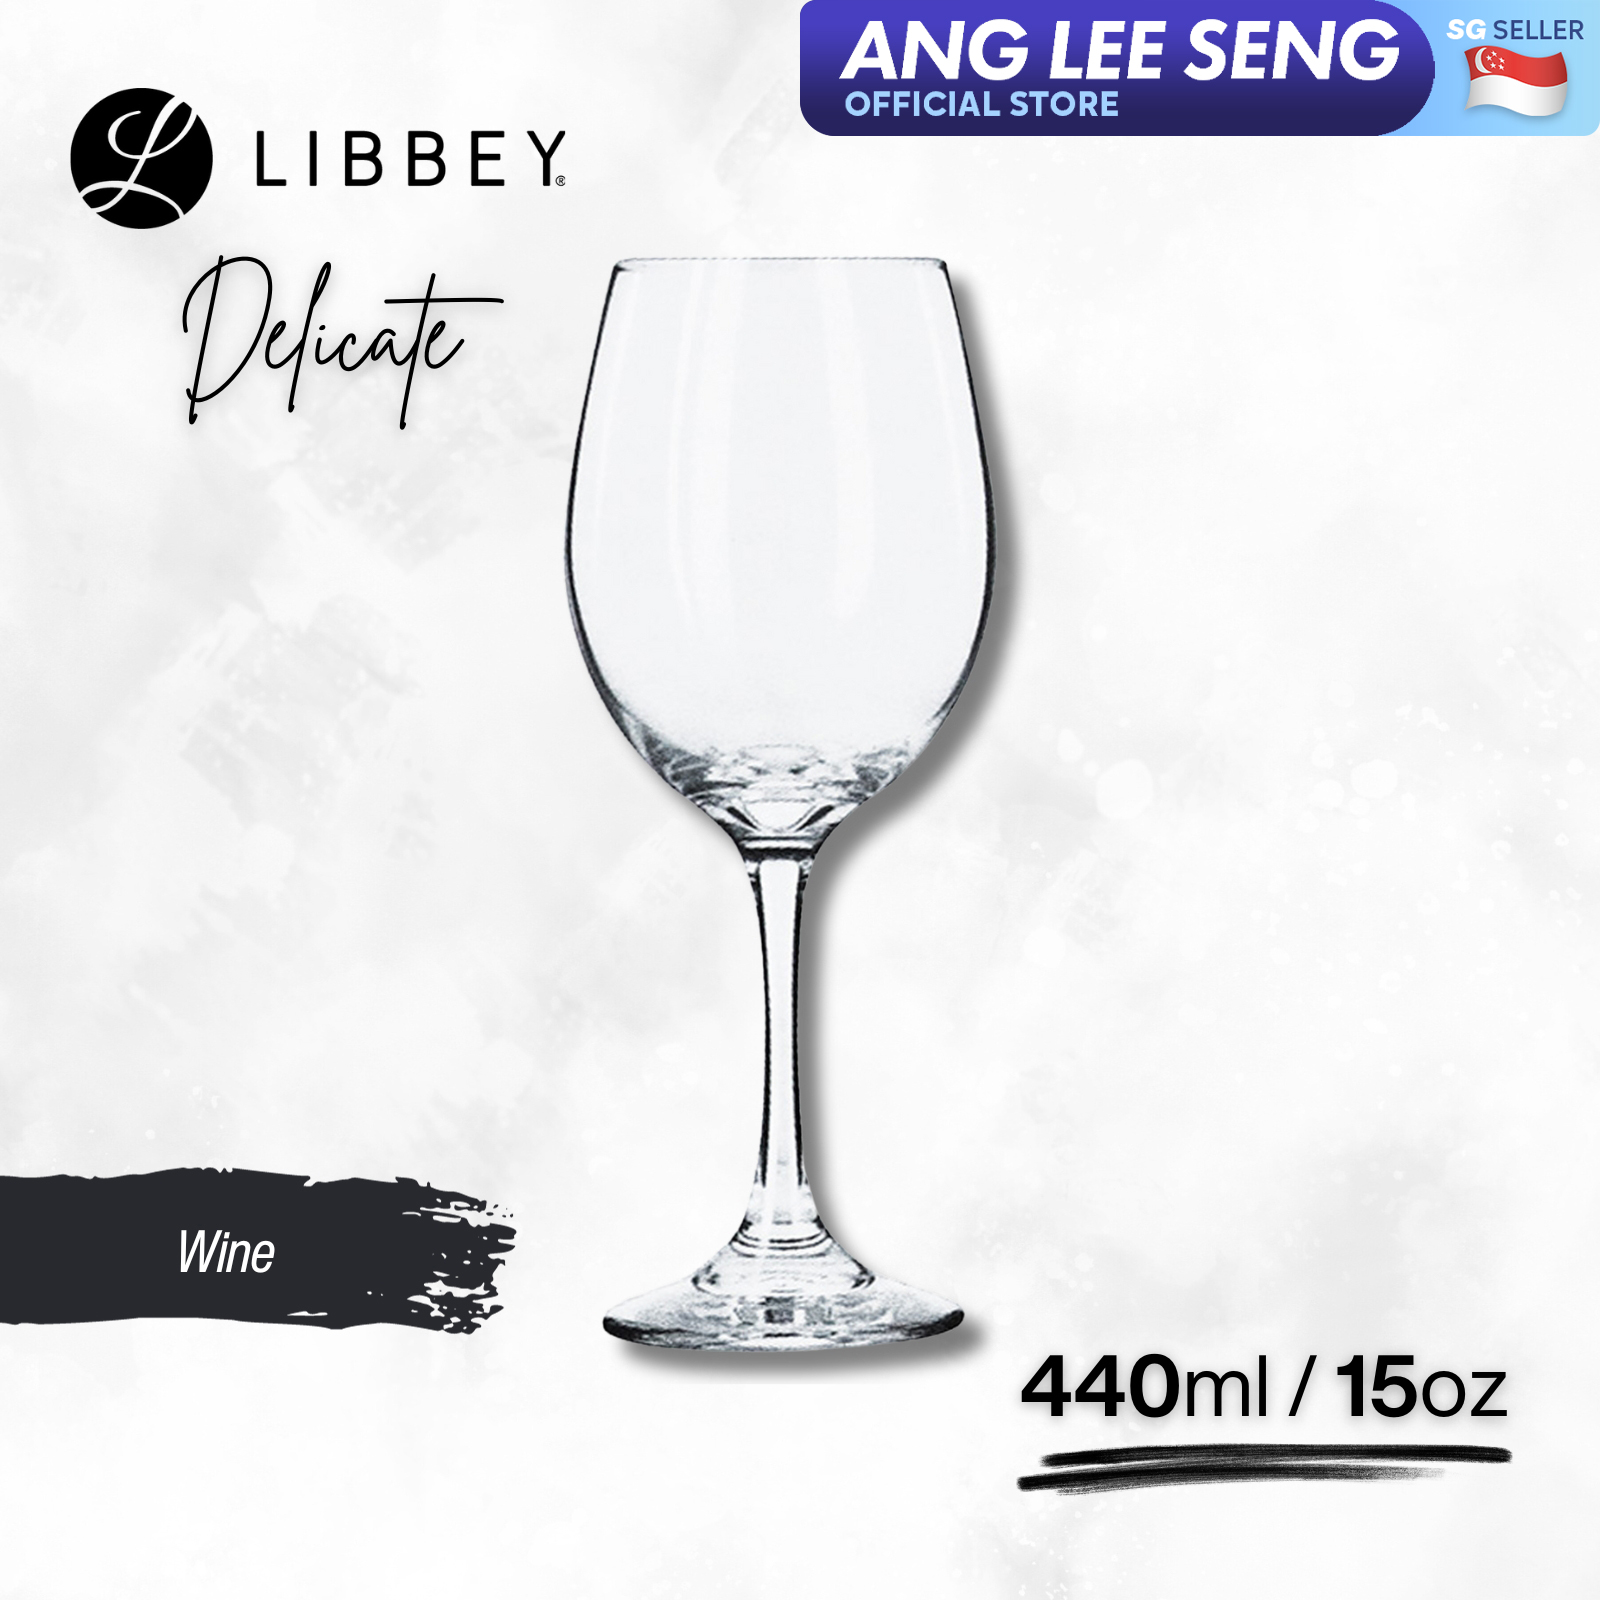 Libbey Delicate 3048 Wine Glass 440ml/15oz, 2-pc/6-pc Set